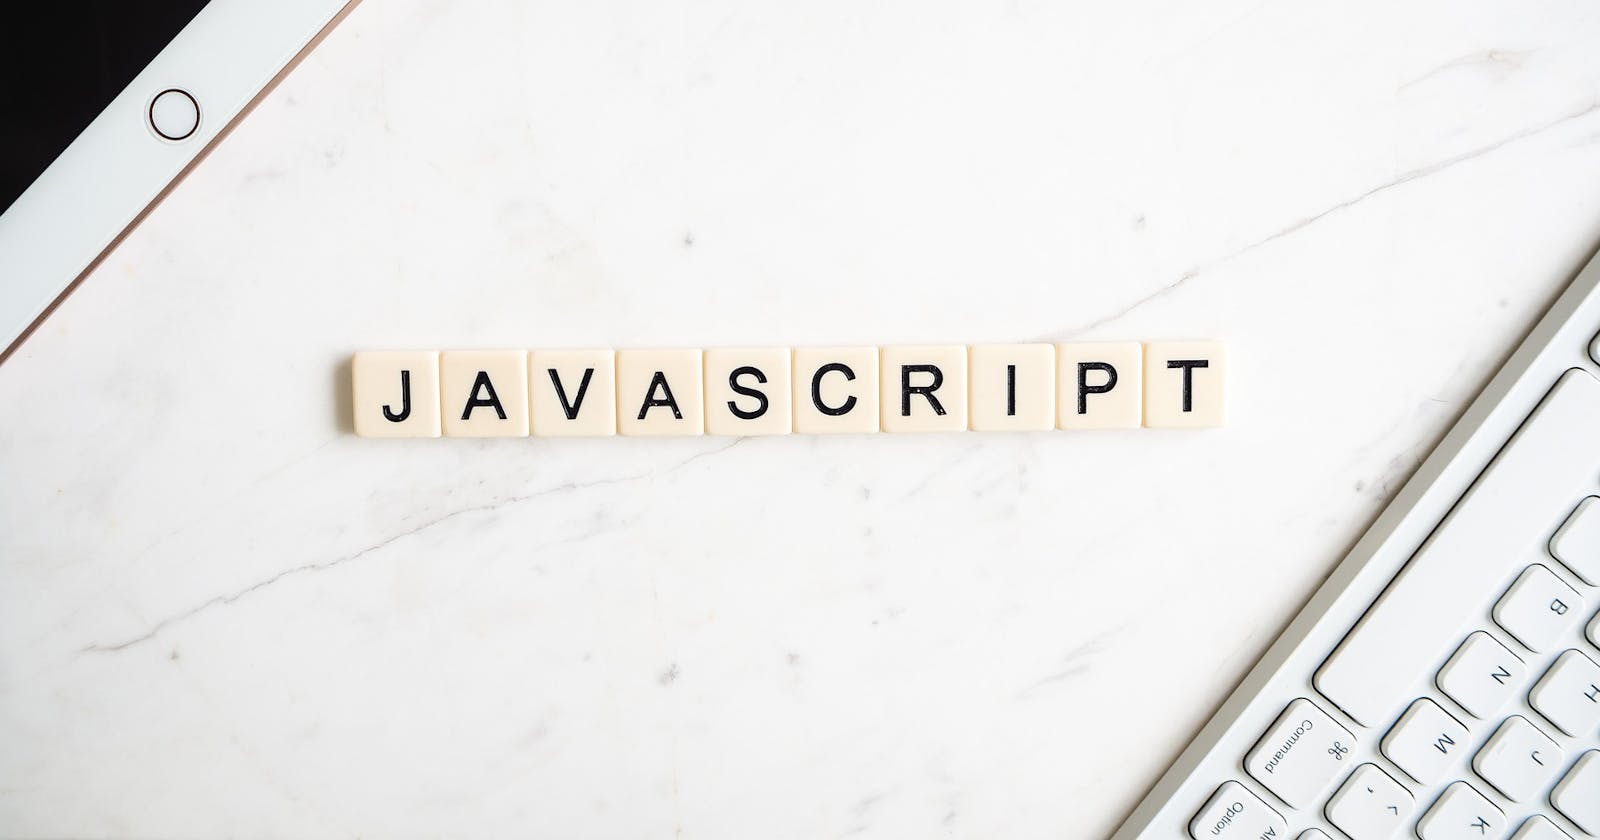 Ultimate FREE Javascript Resources